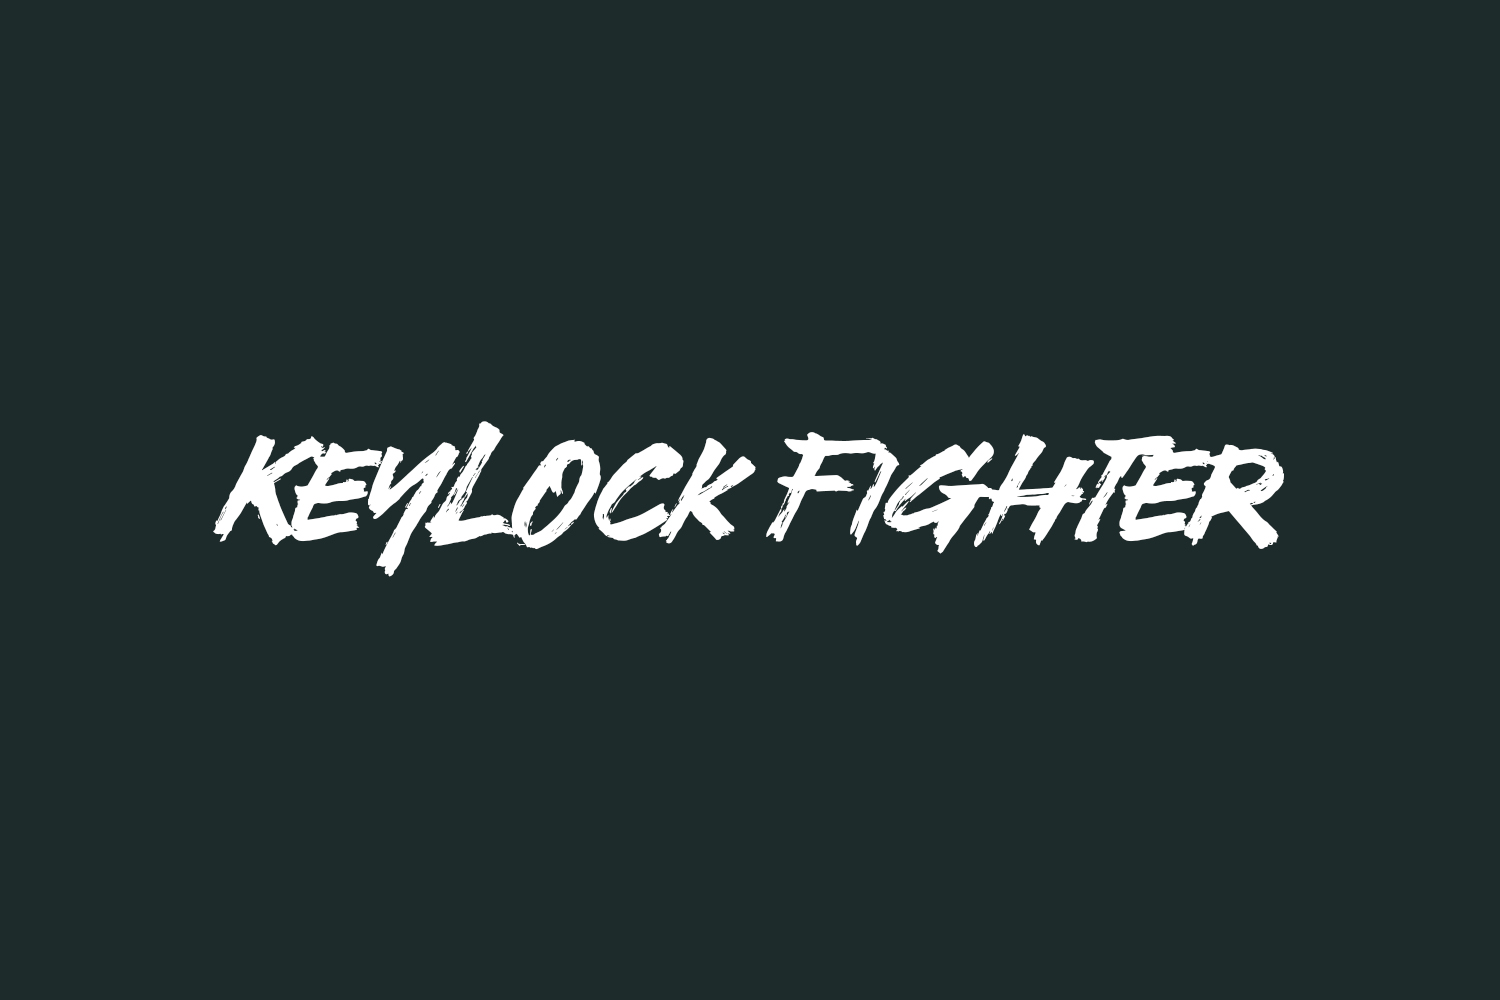 Keylock Fighter Free Font